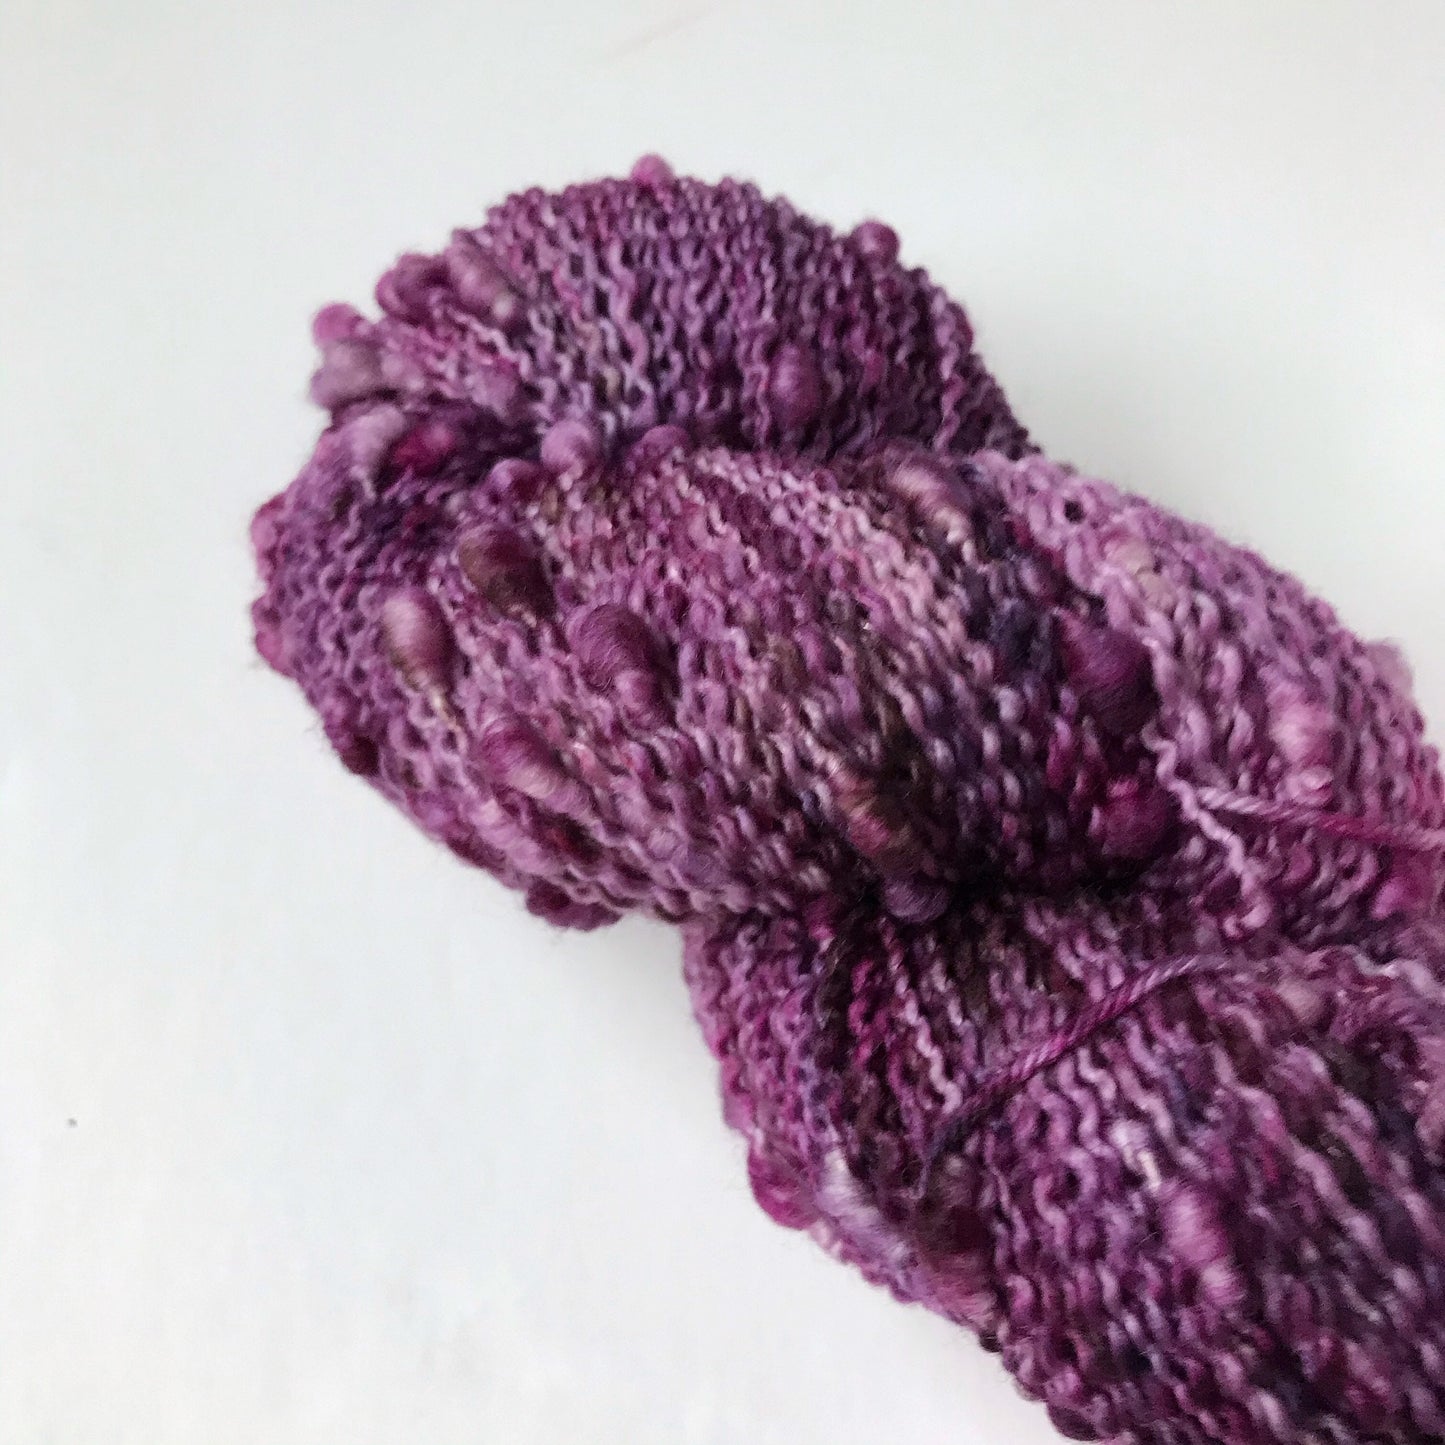 textured purple, burgundy and black fingering weight yarn